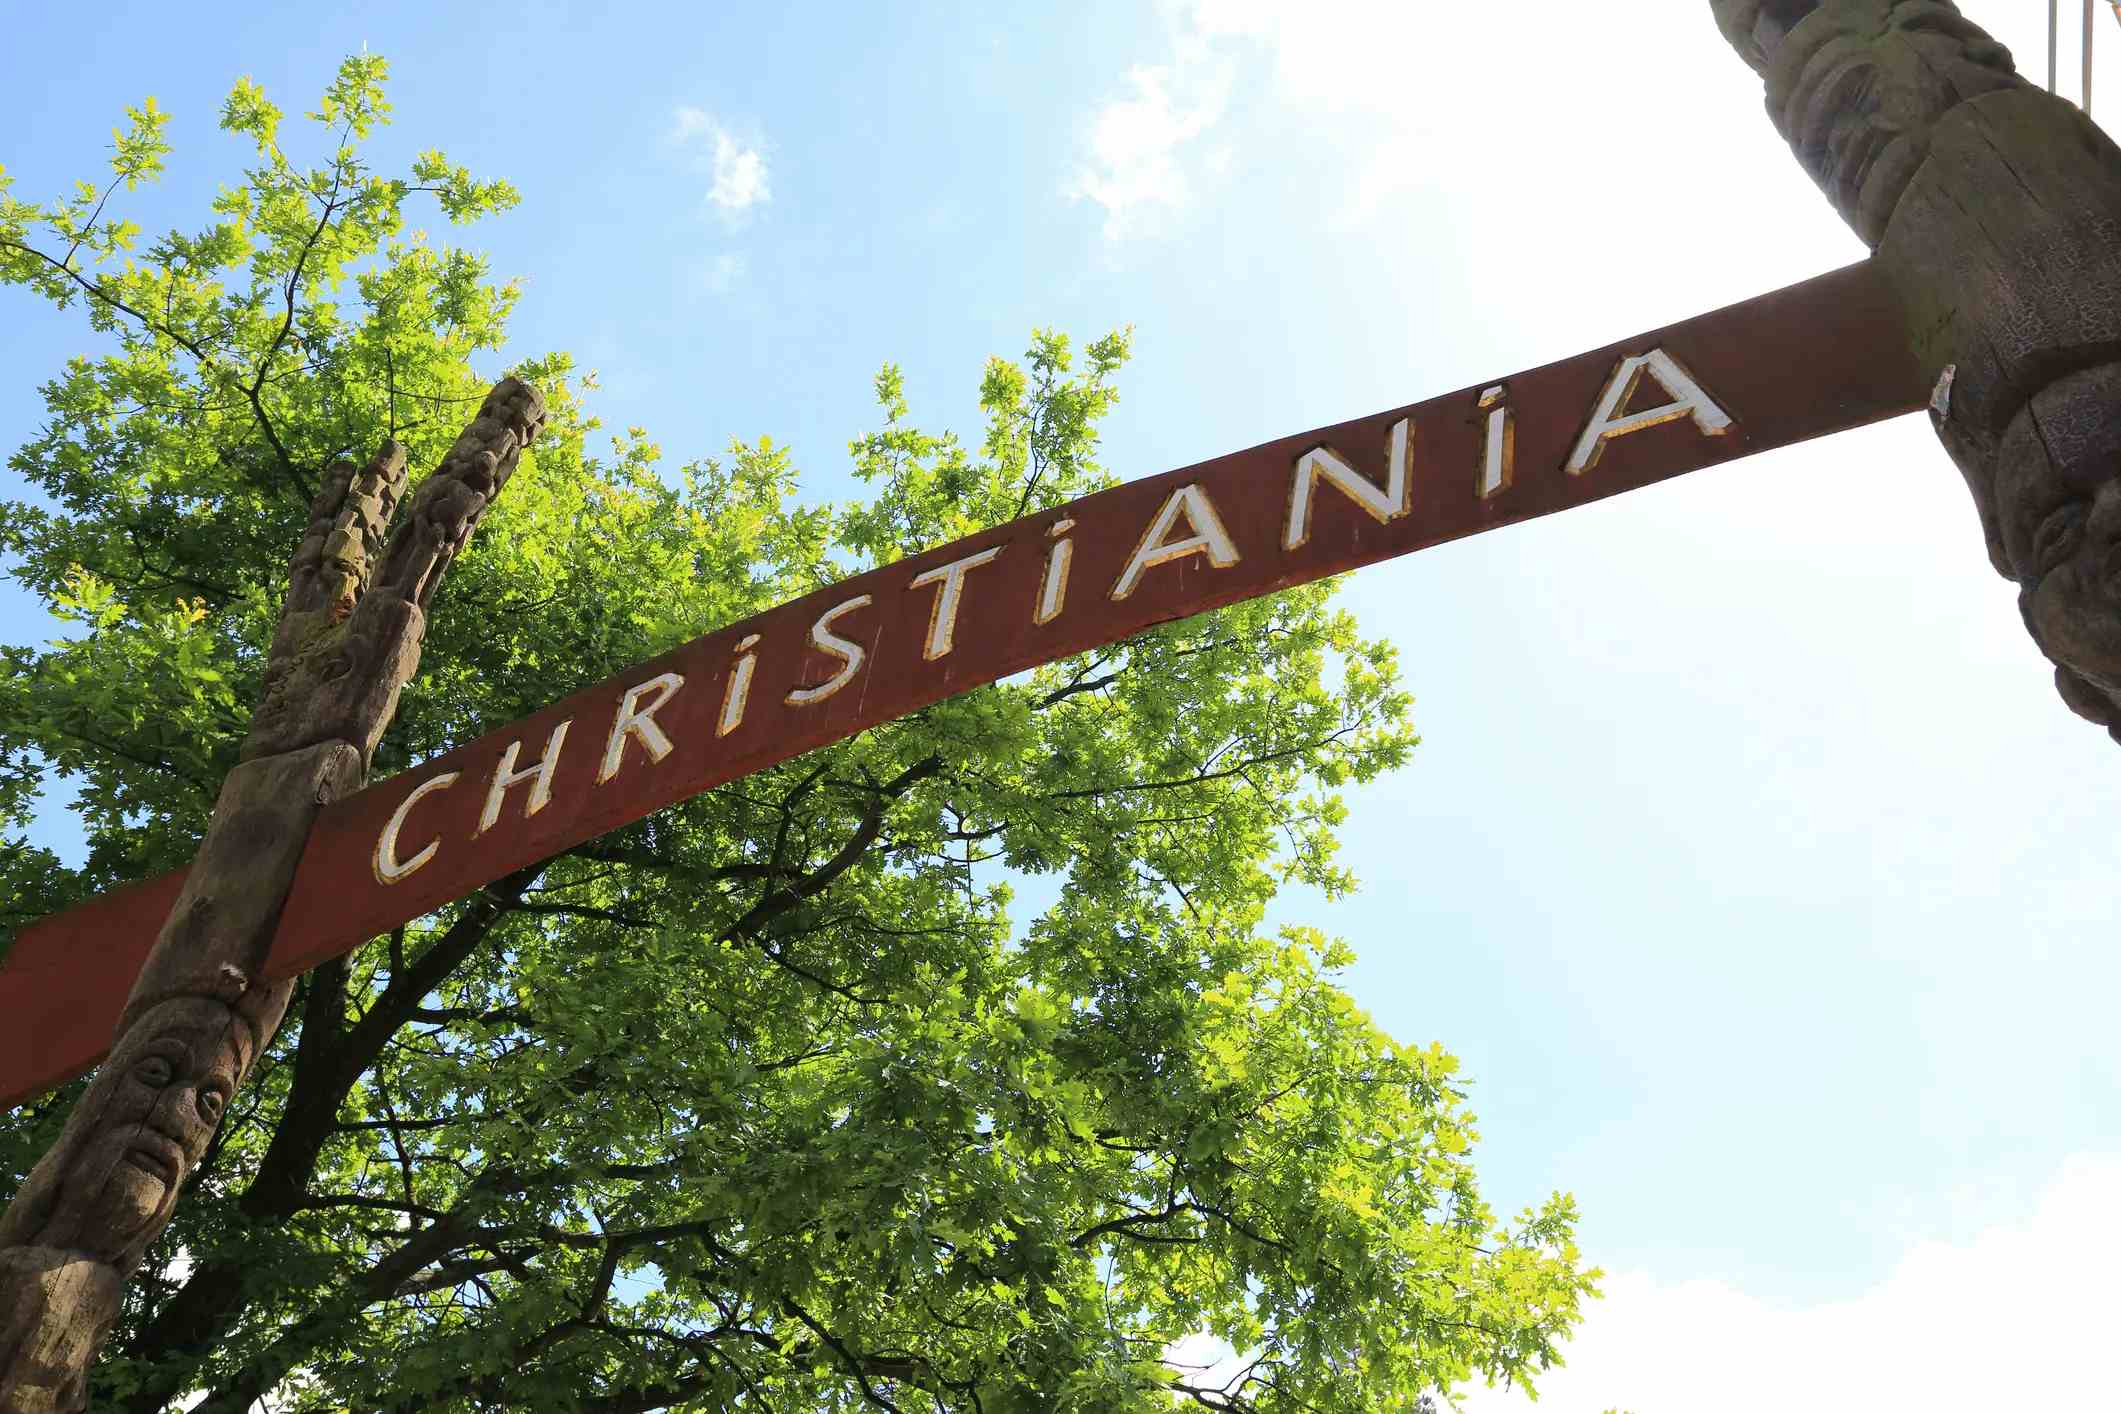 Ciudad libre de Christiania image